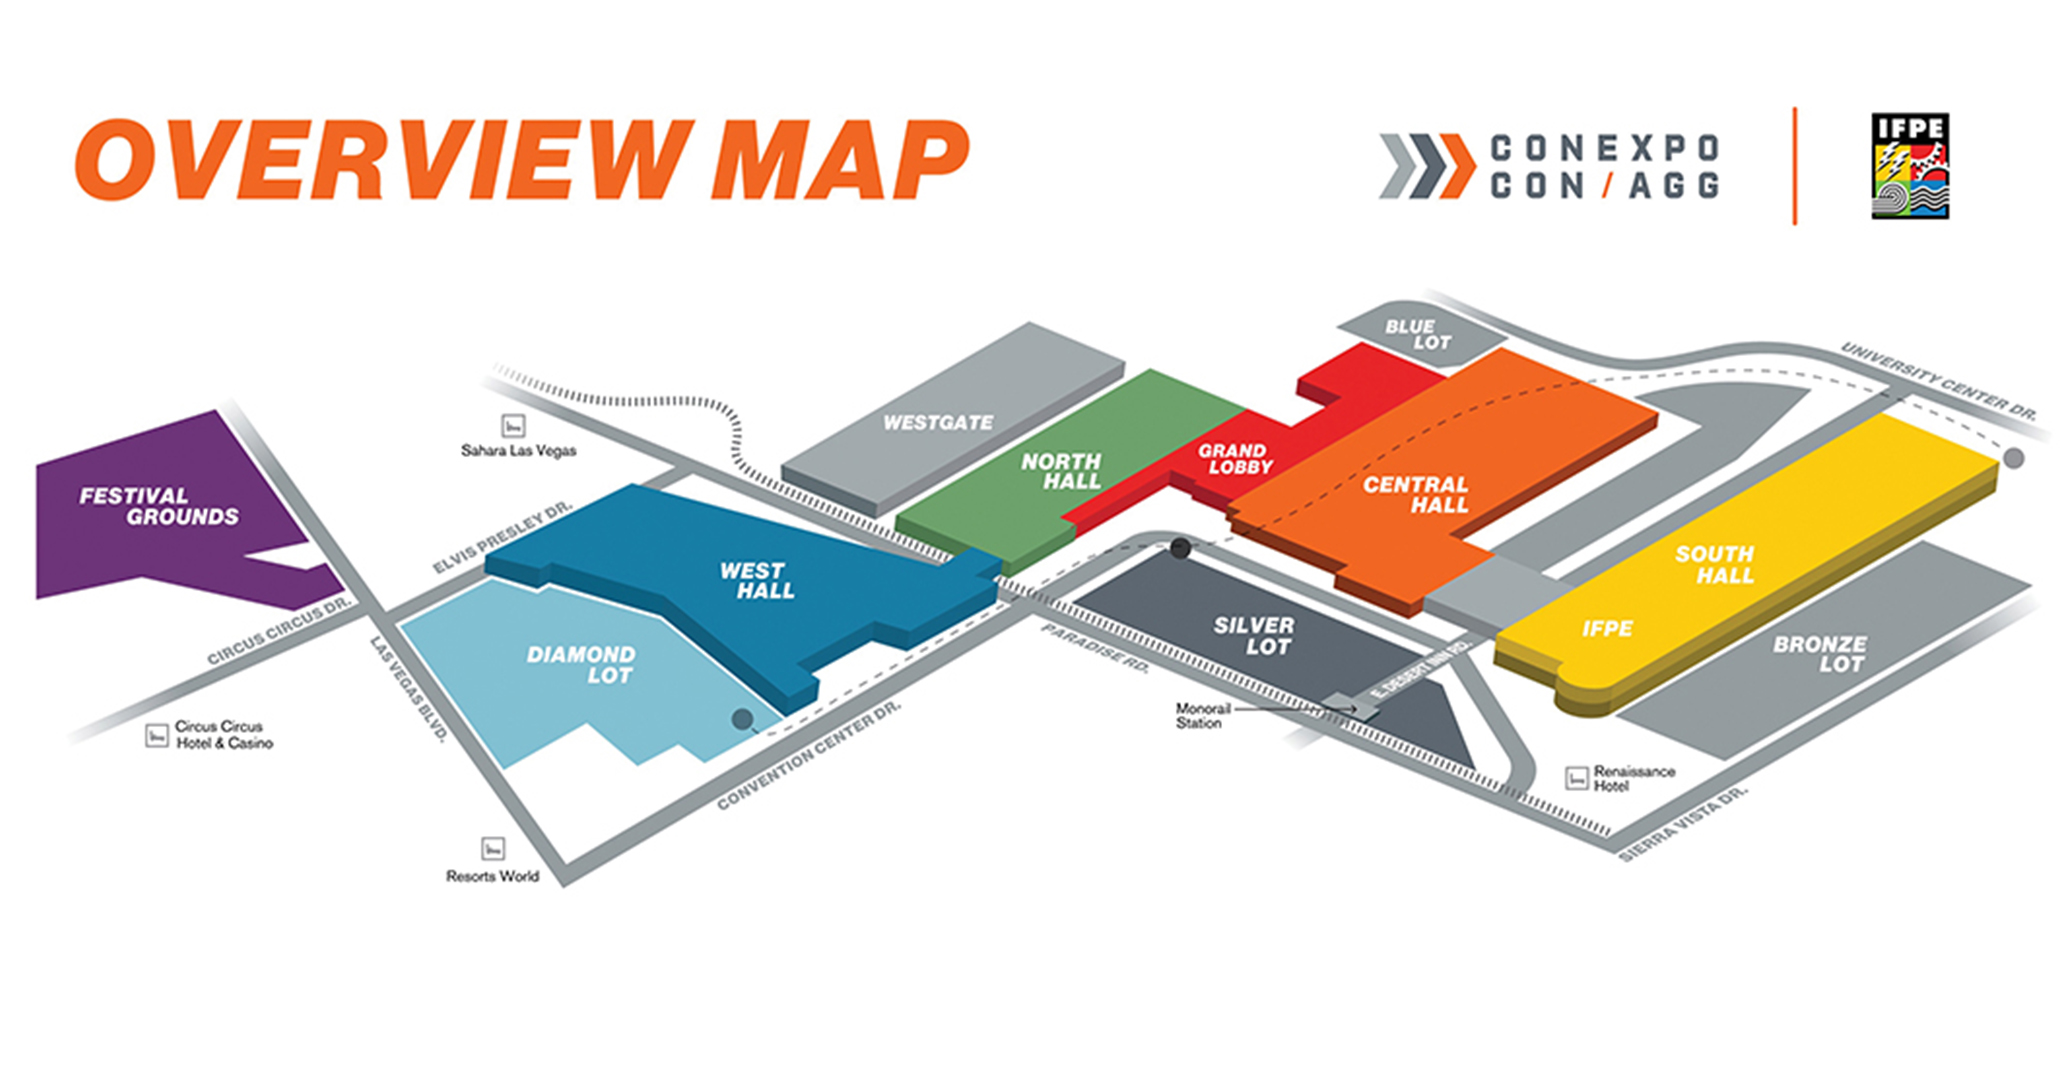 CONEXPO CON/AGG Overview map for 2023